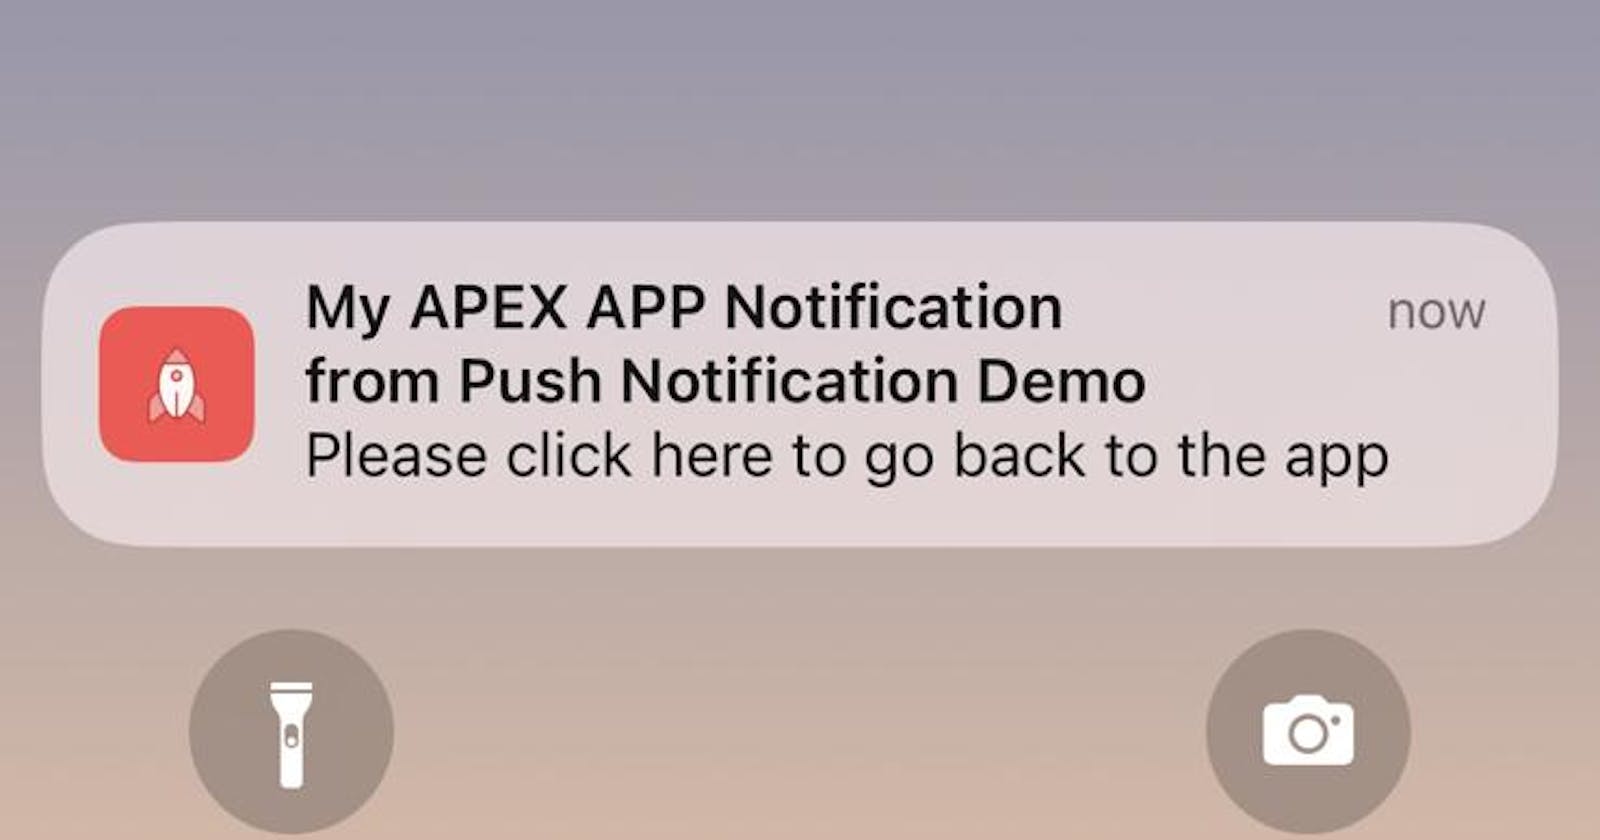 APEX PWA Push Notifications in just a few minutes